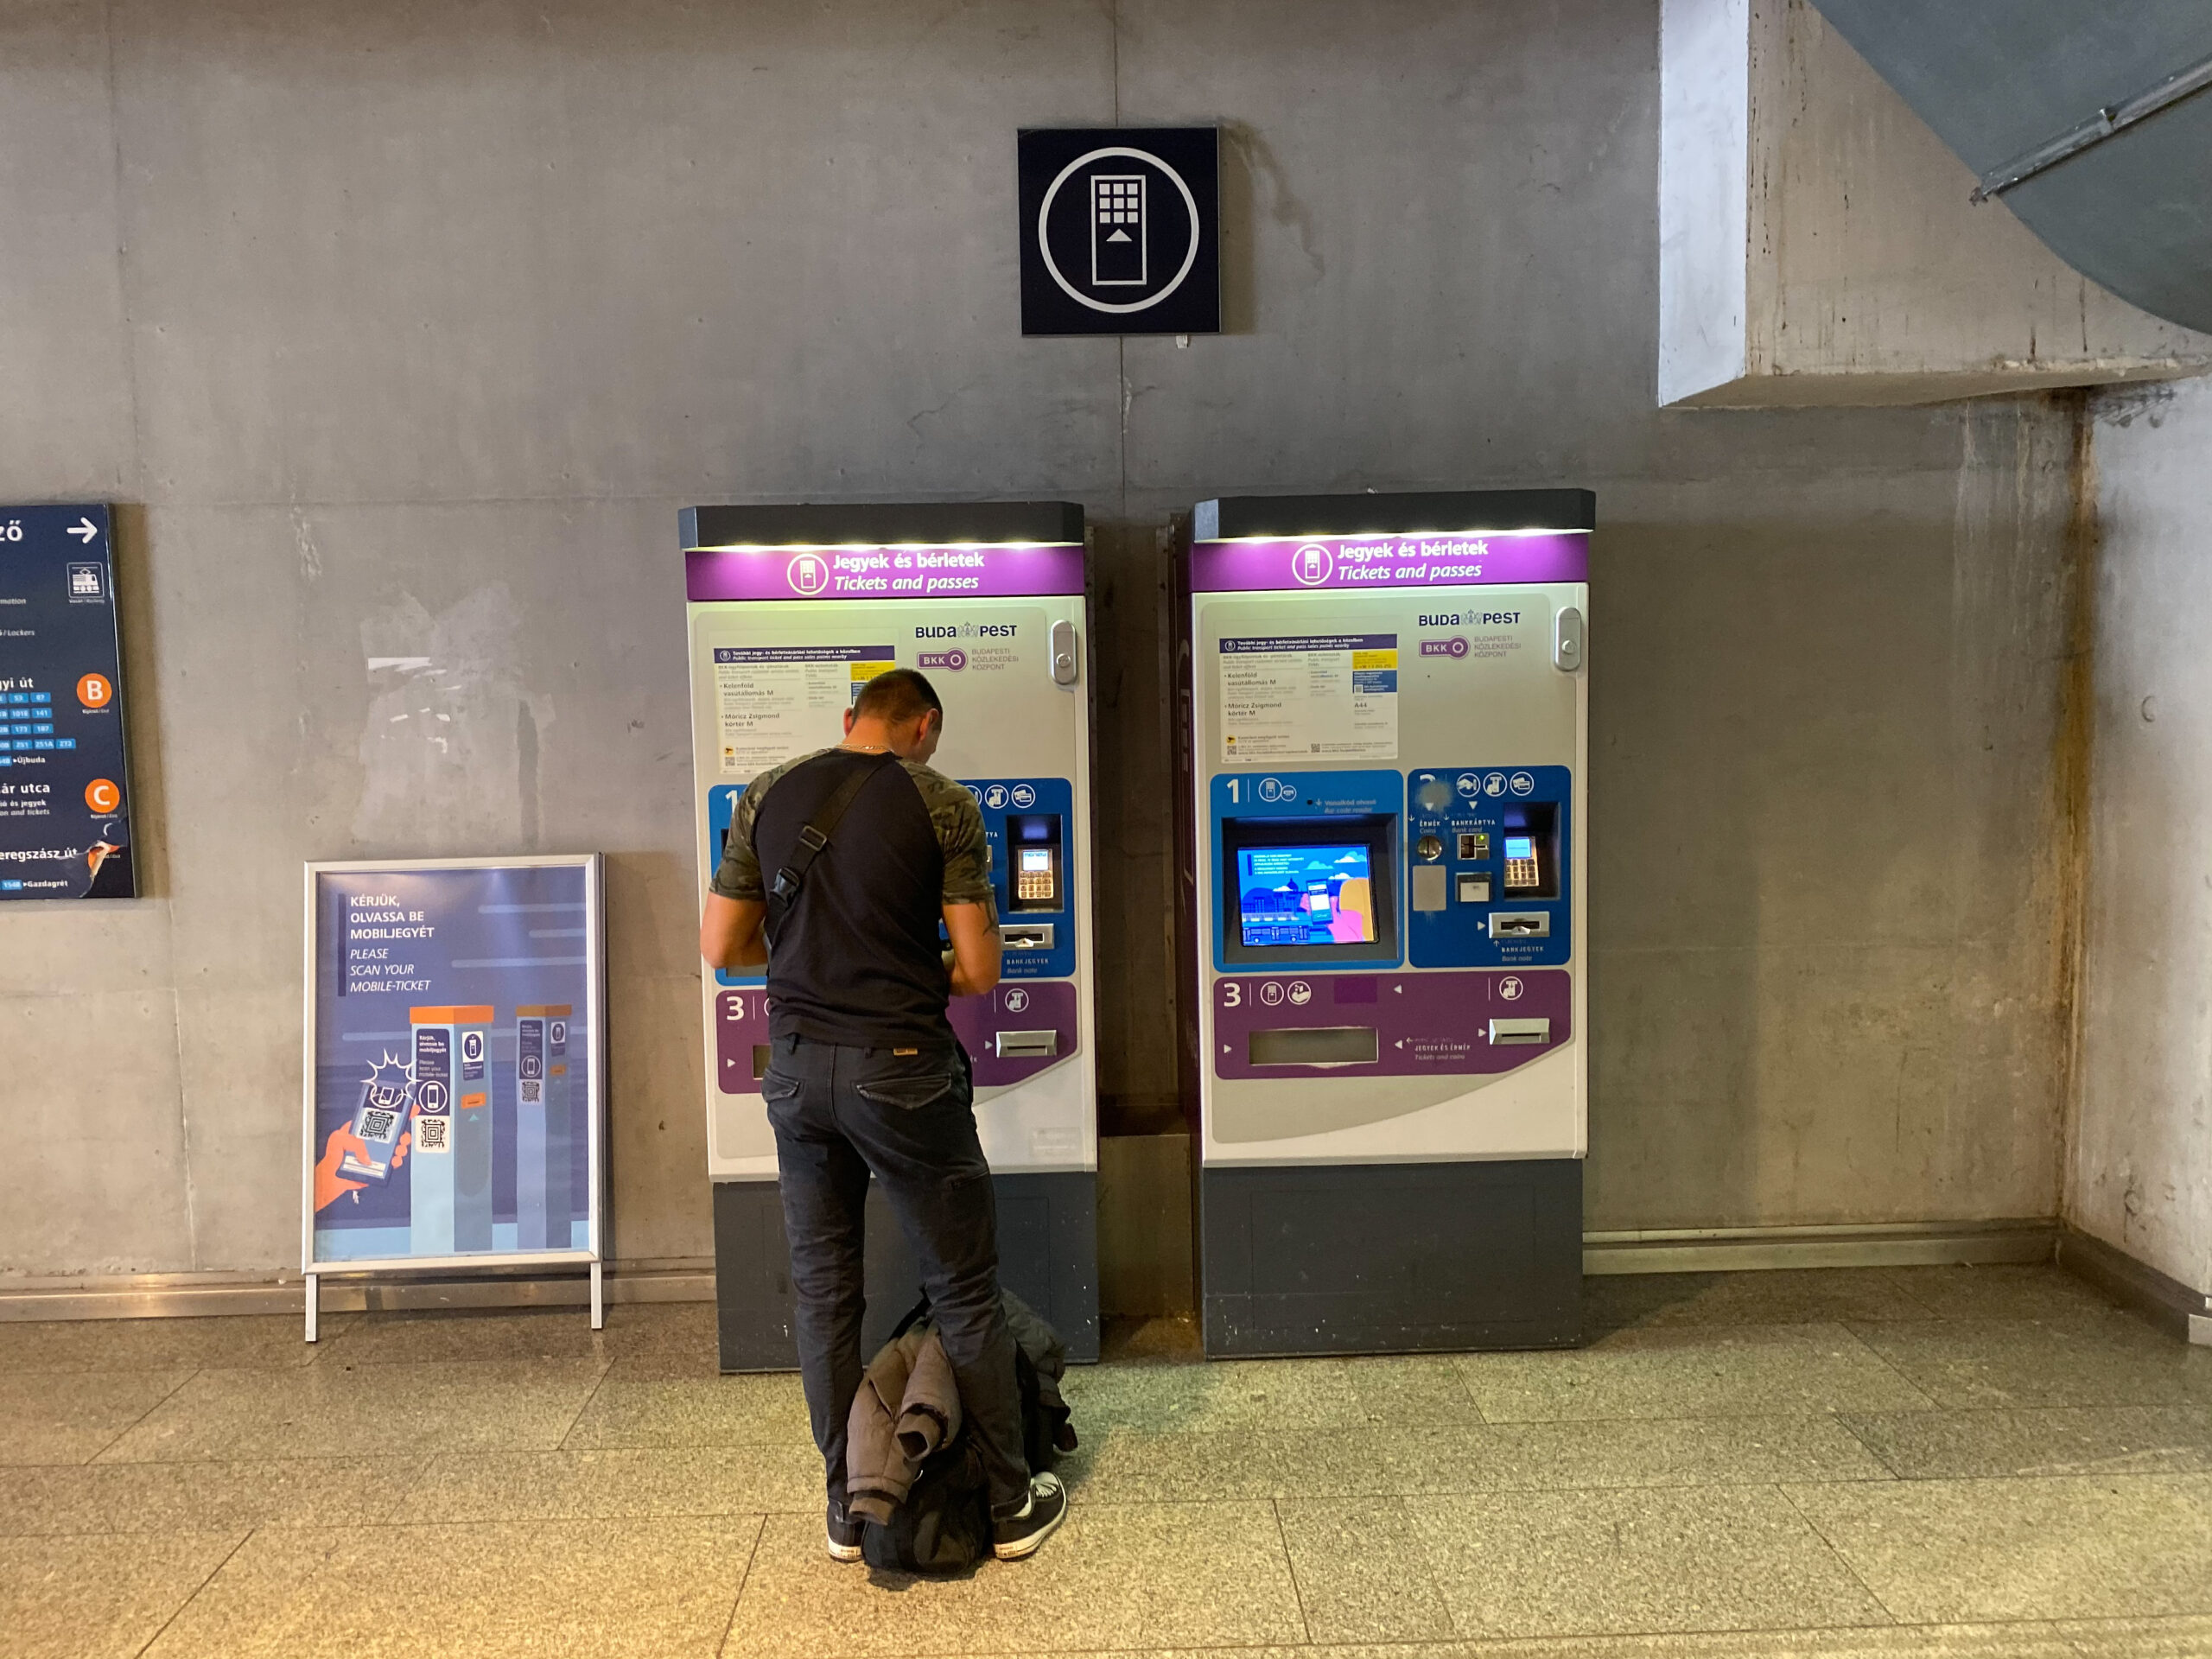 Ticket machines at Kelenföld